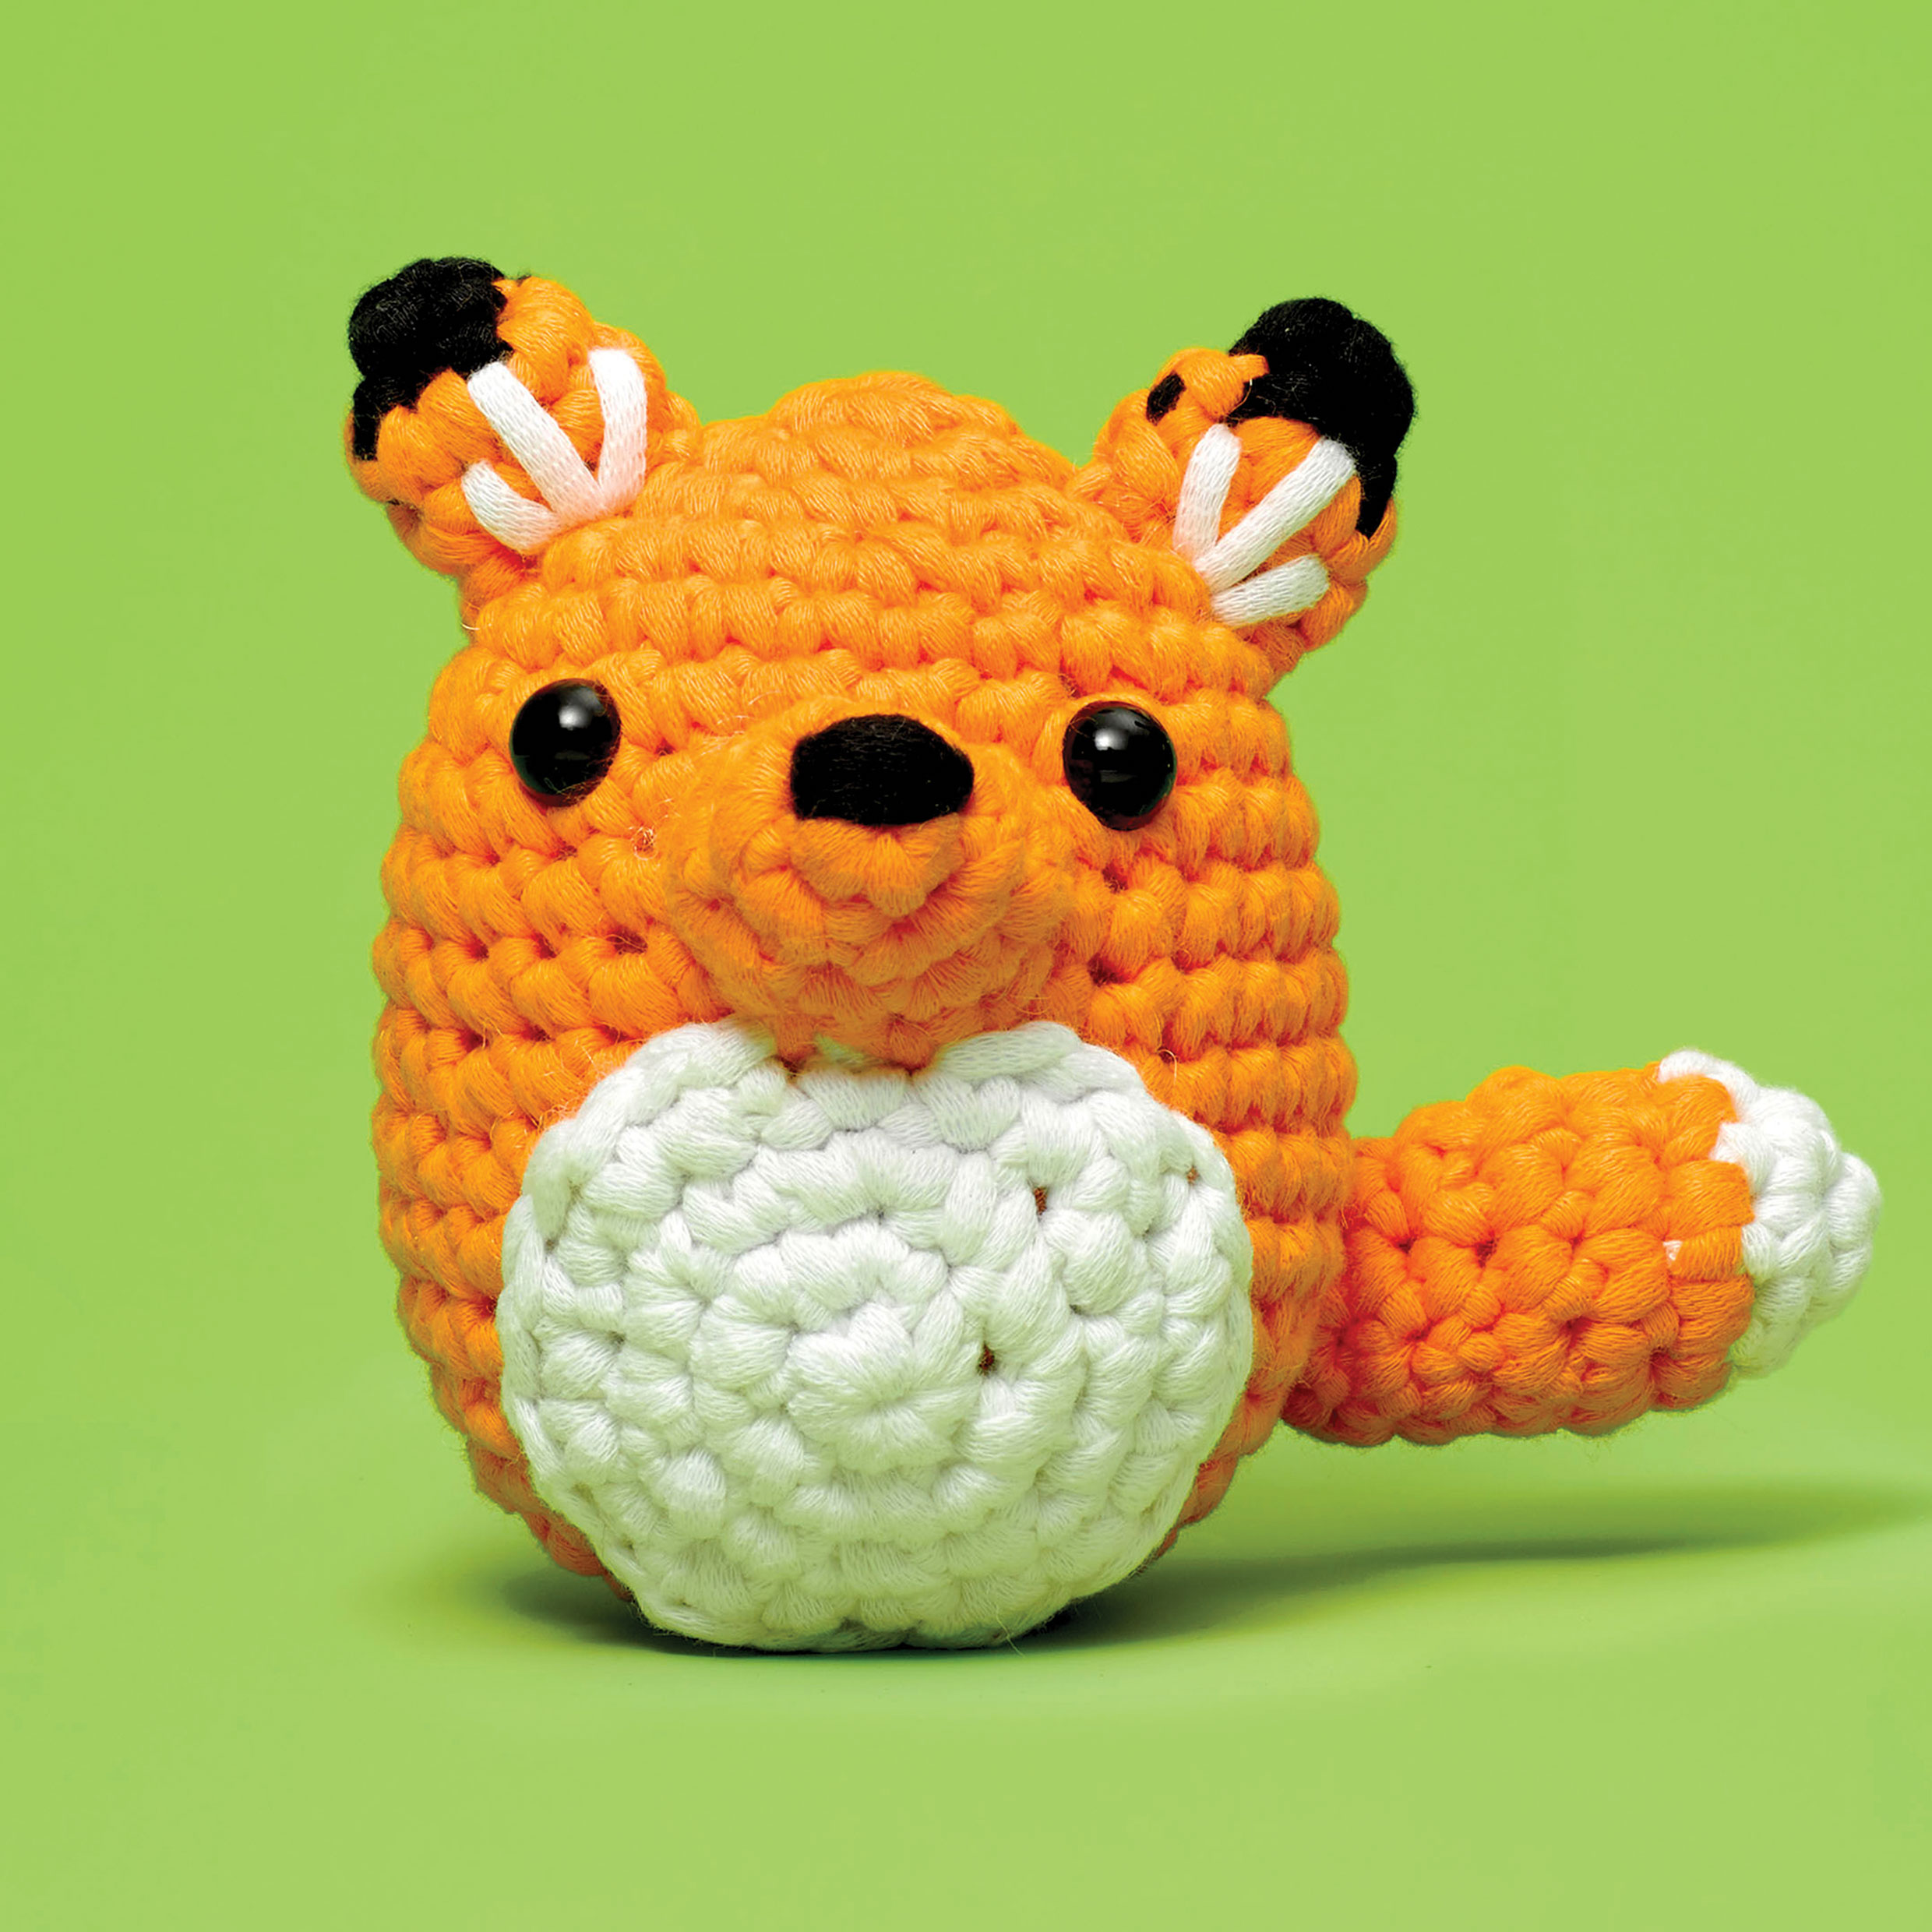 The Woobles Beginner Crochet Amigurumi Kits | BLICK Art Materials